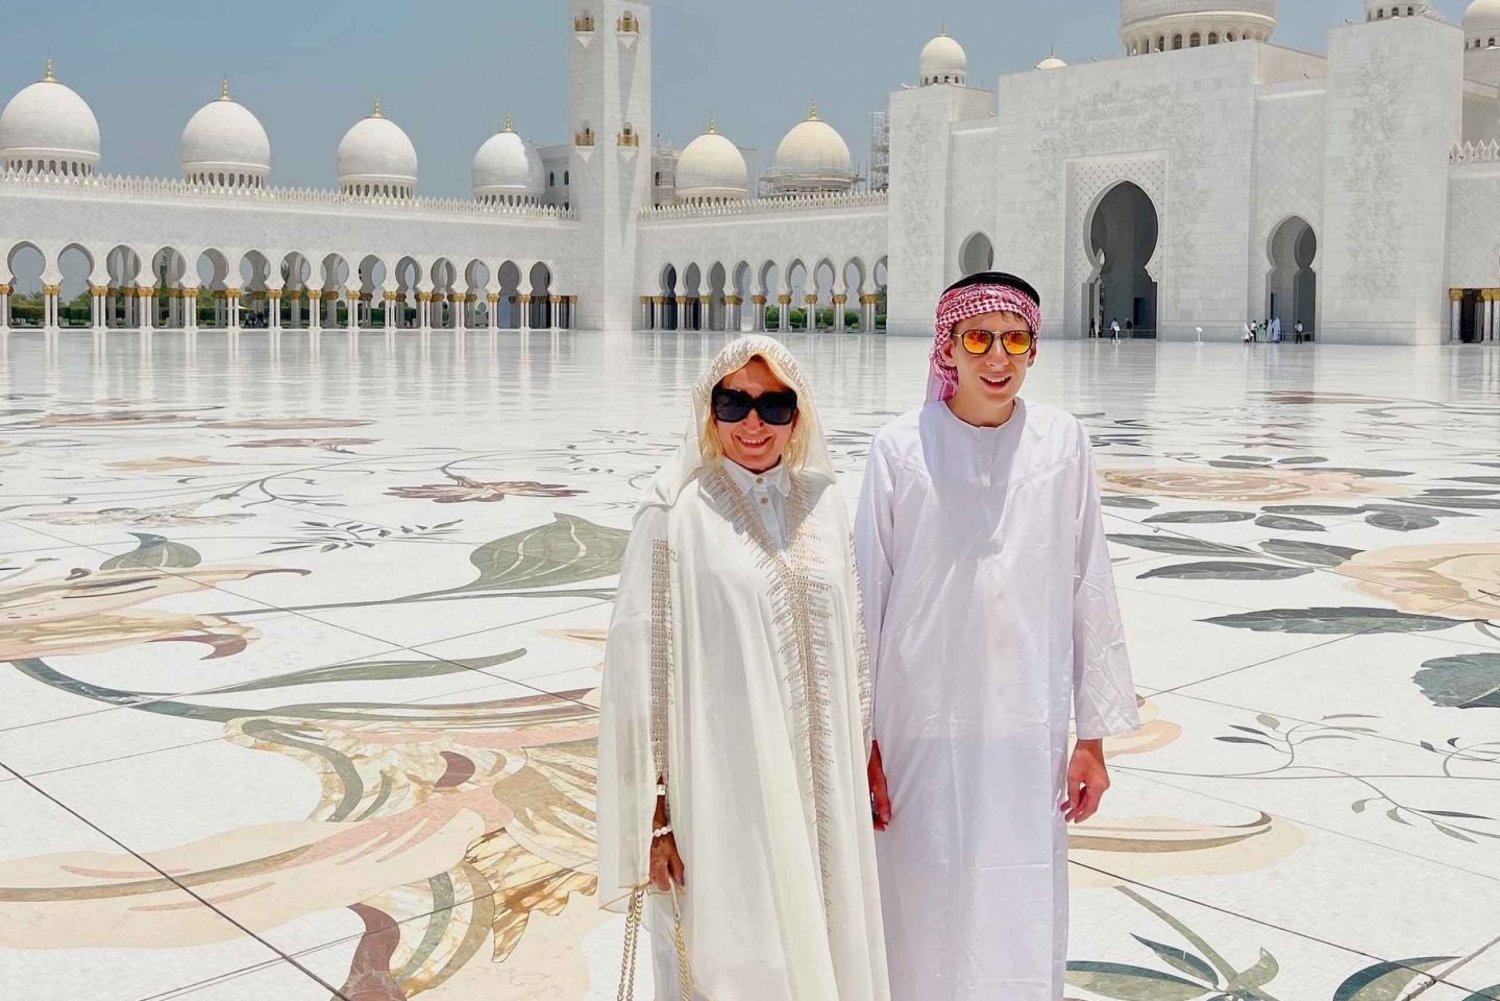 Dubai: Abu Dhabi: passeio turístico e Grande Mesquita - Emirates